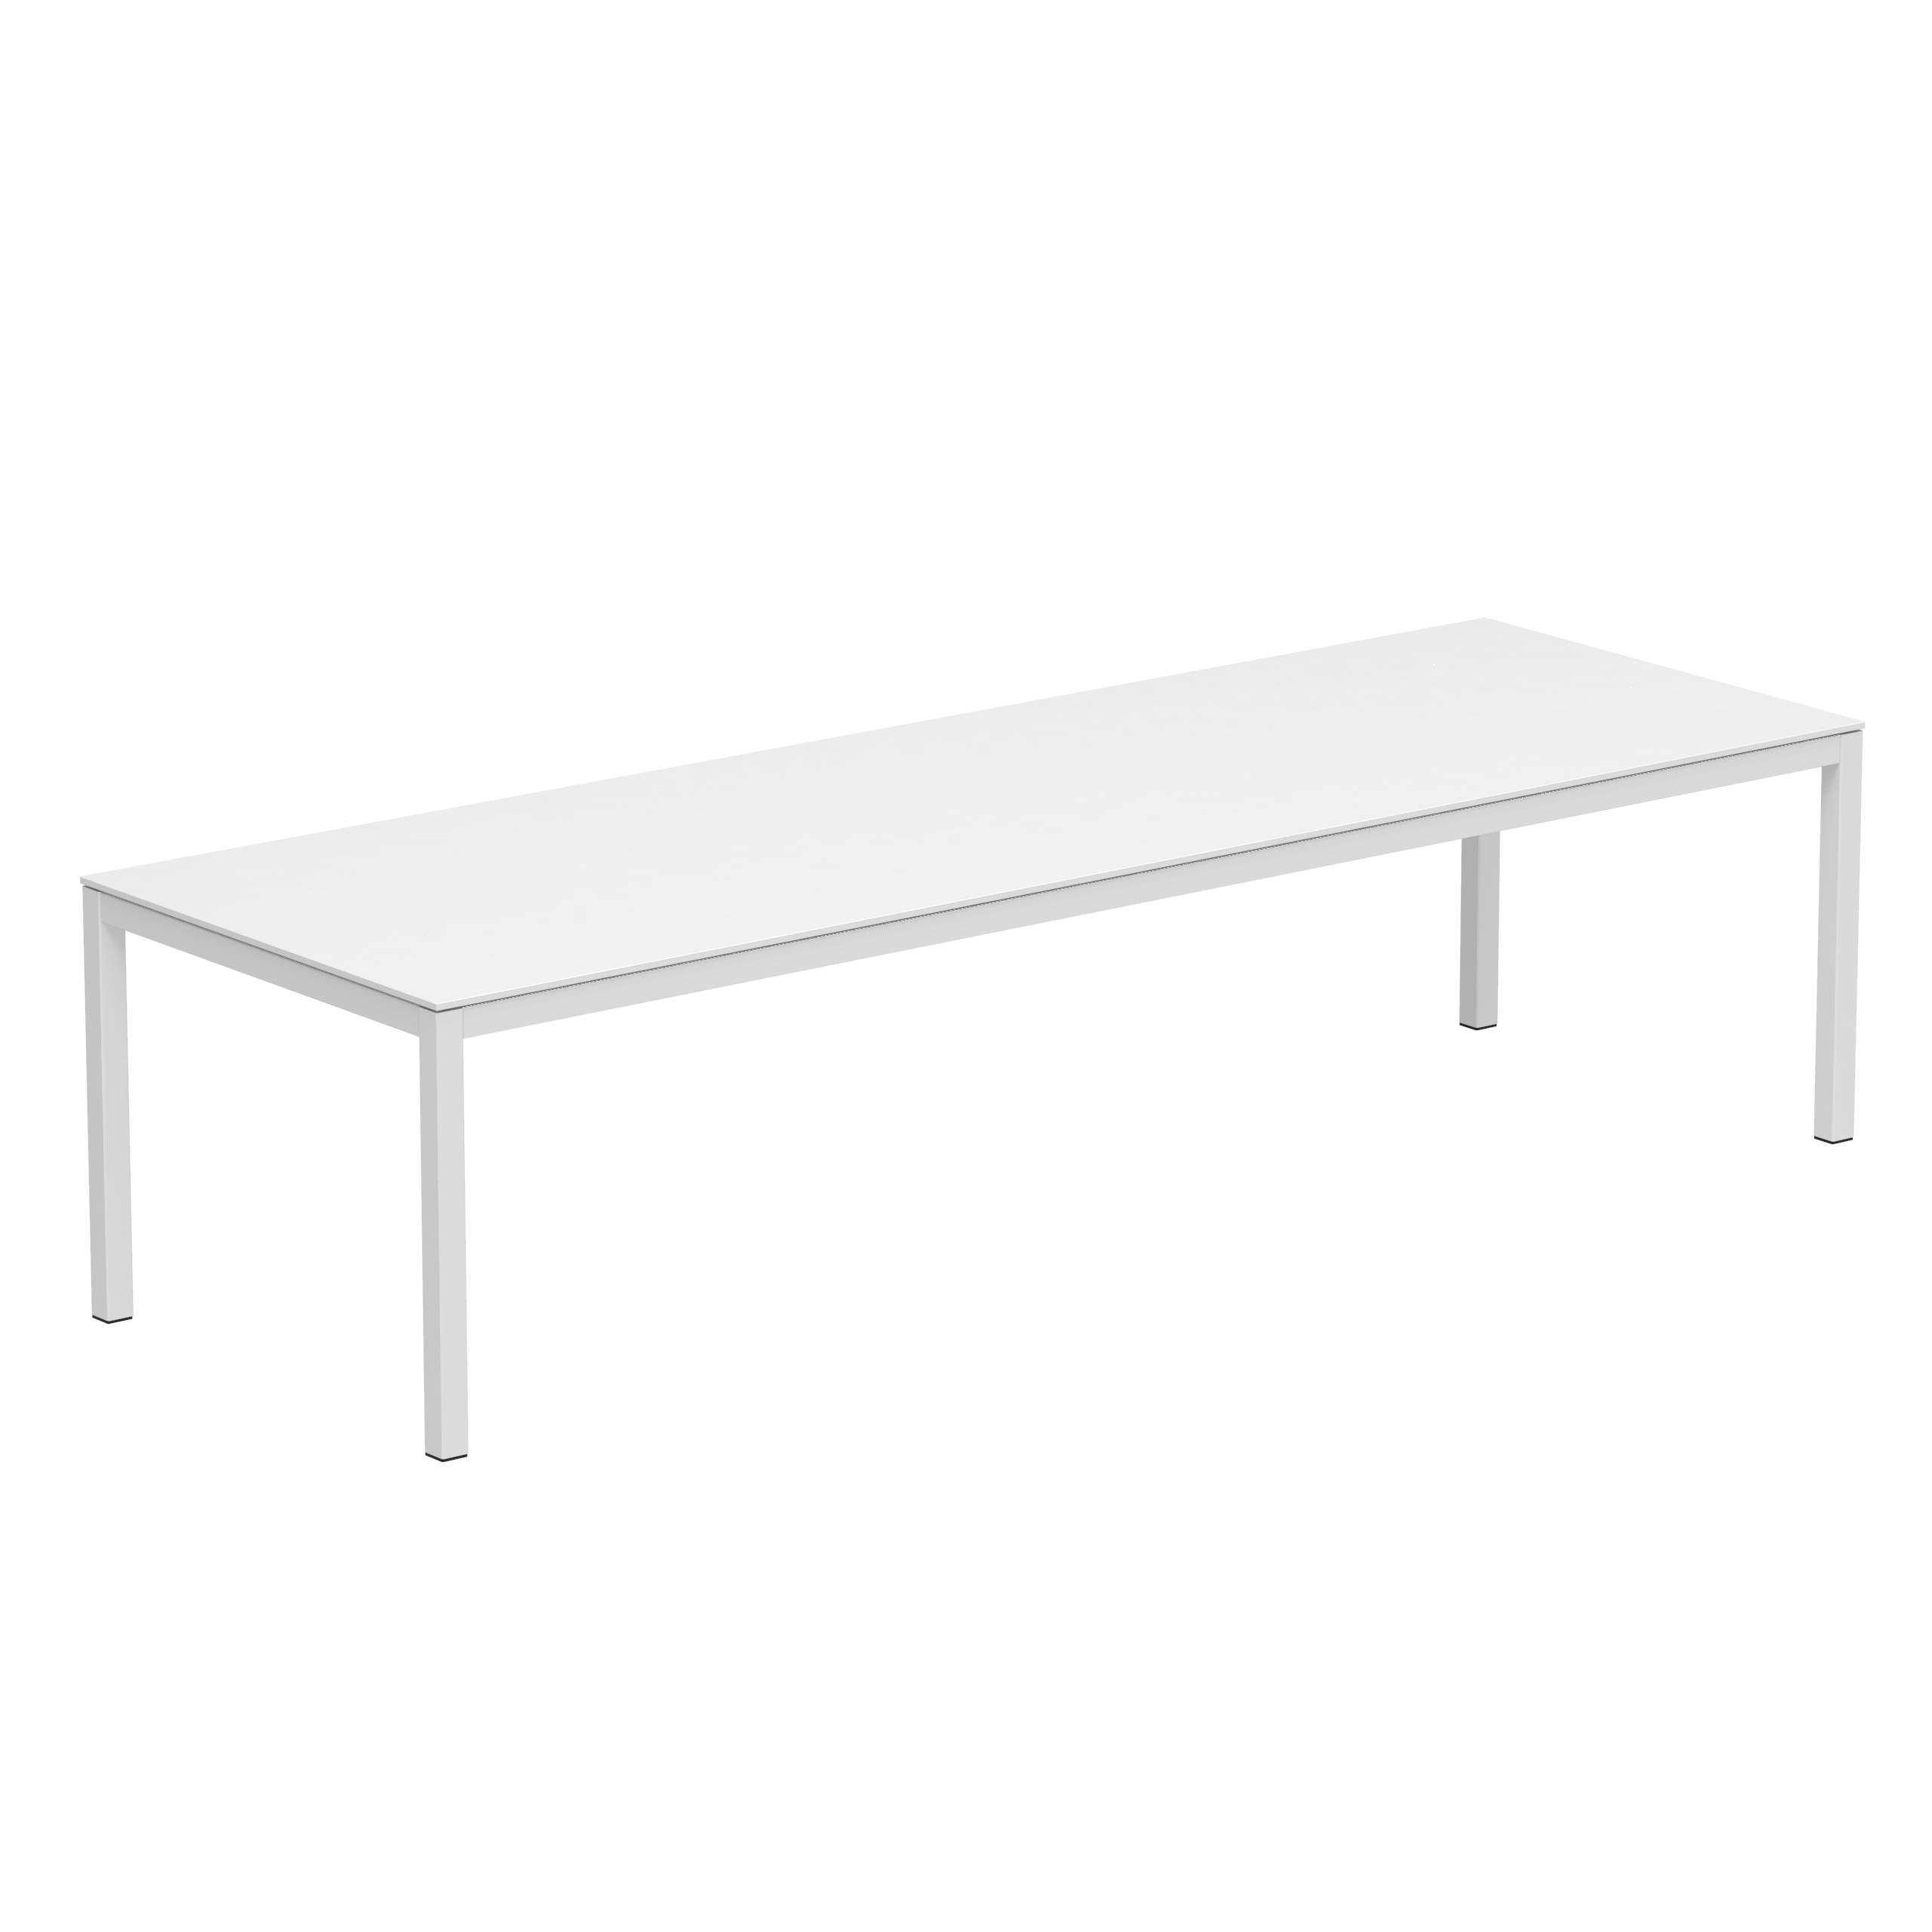 Taboela Table 300x100cm White + Ceramic Top White